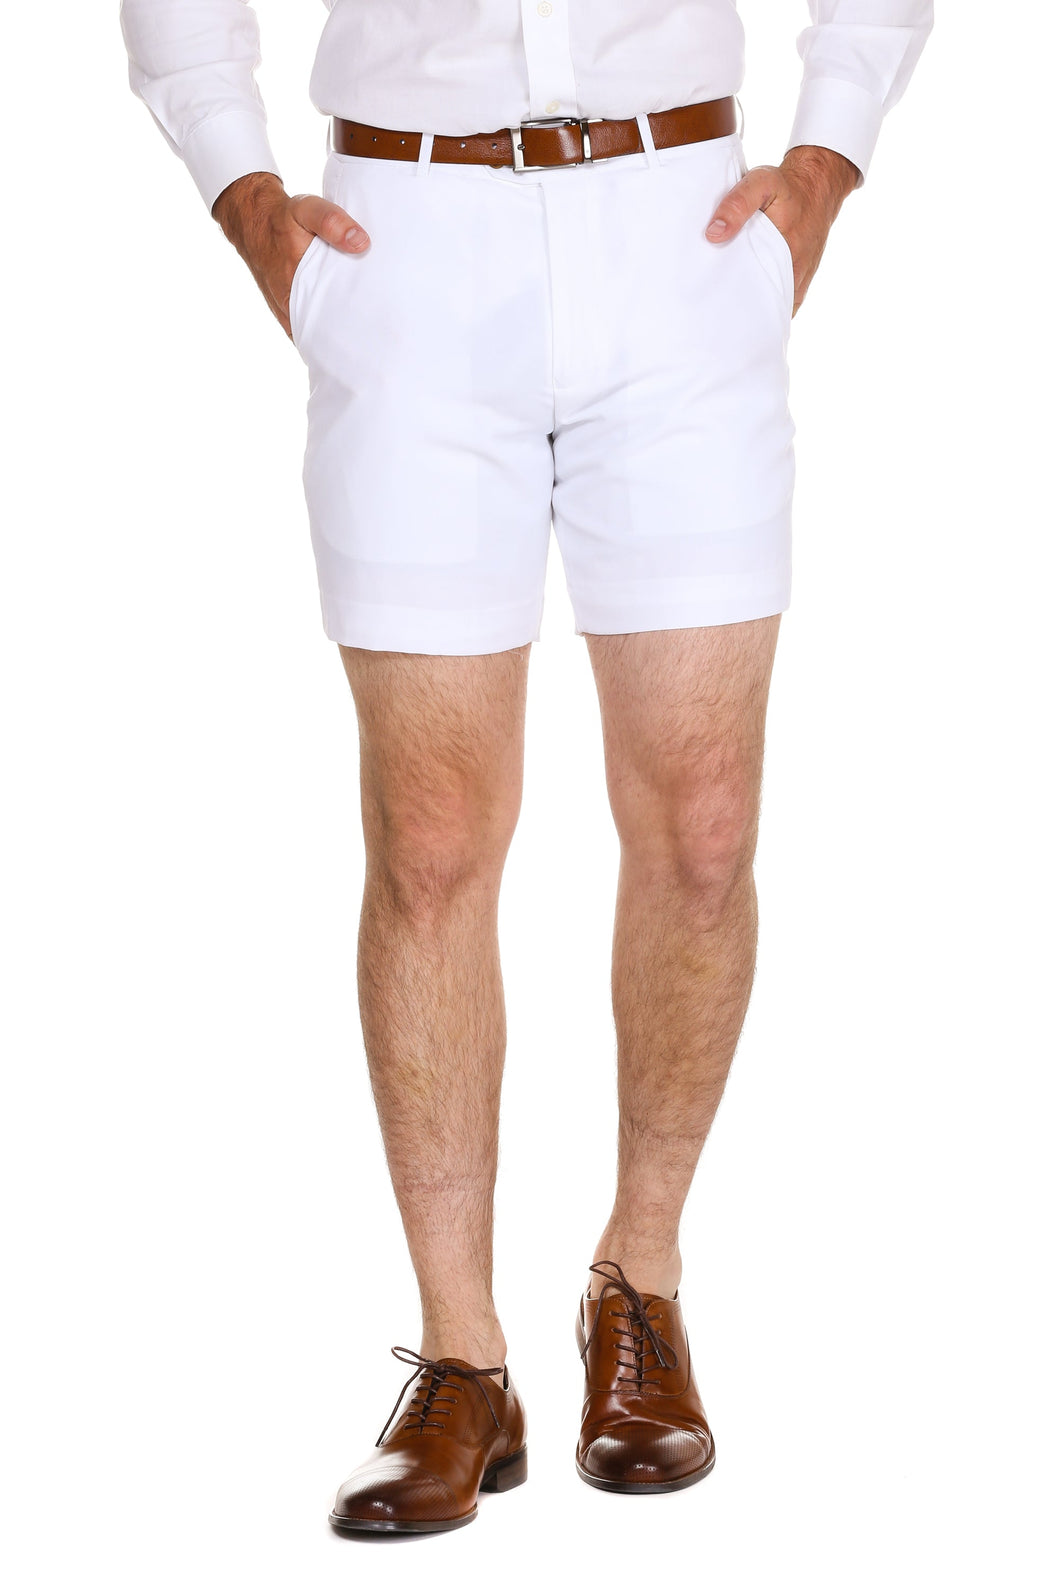 The Yaht Party White suit shorts